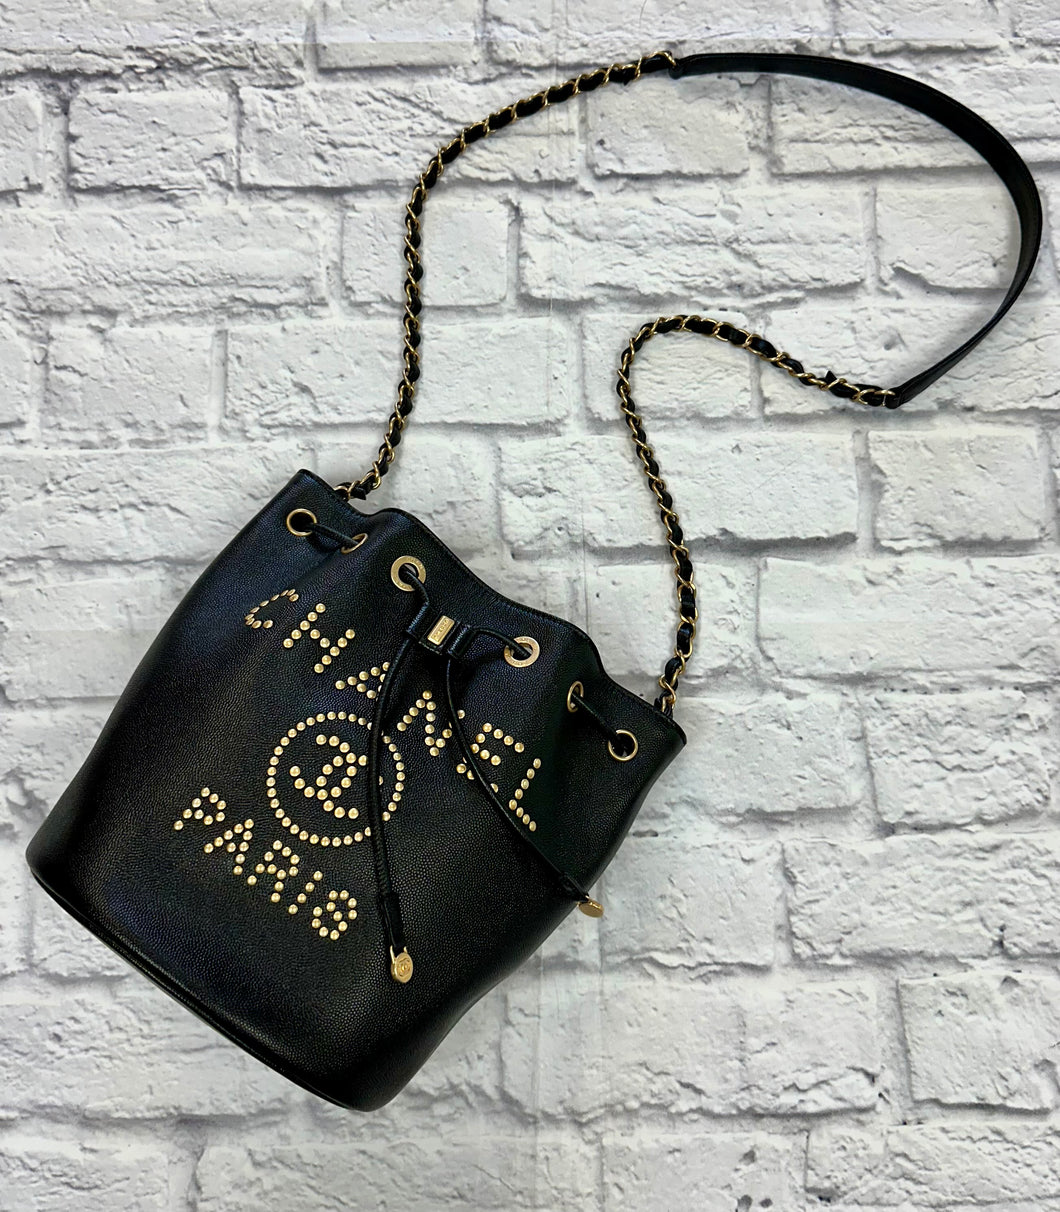 Chanel Black Deauville Bucket Bag